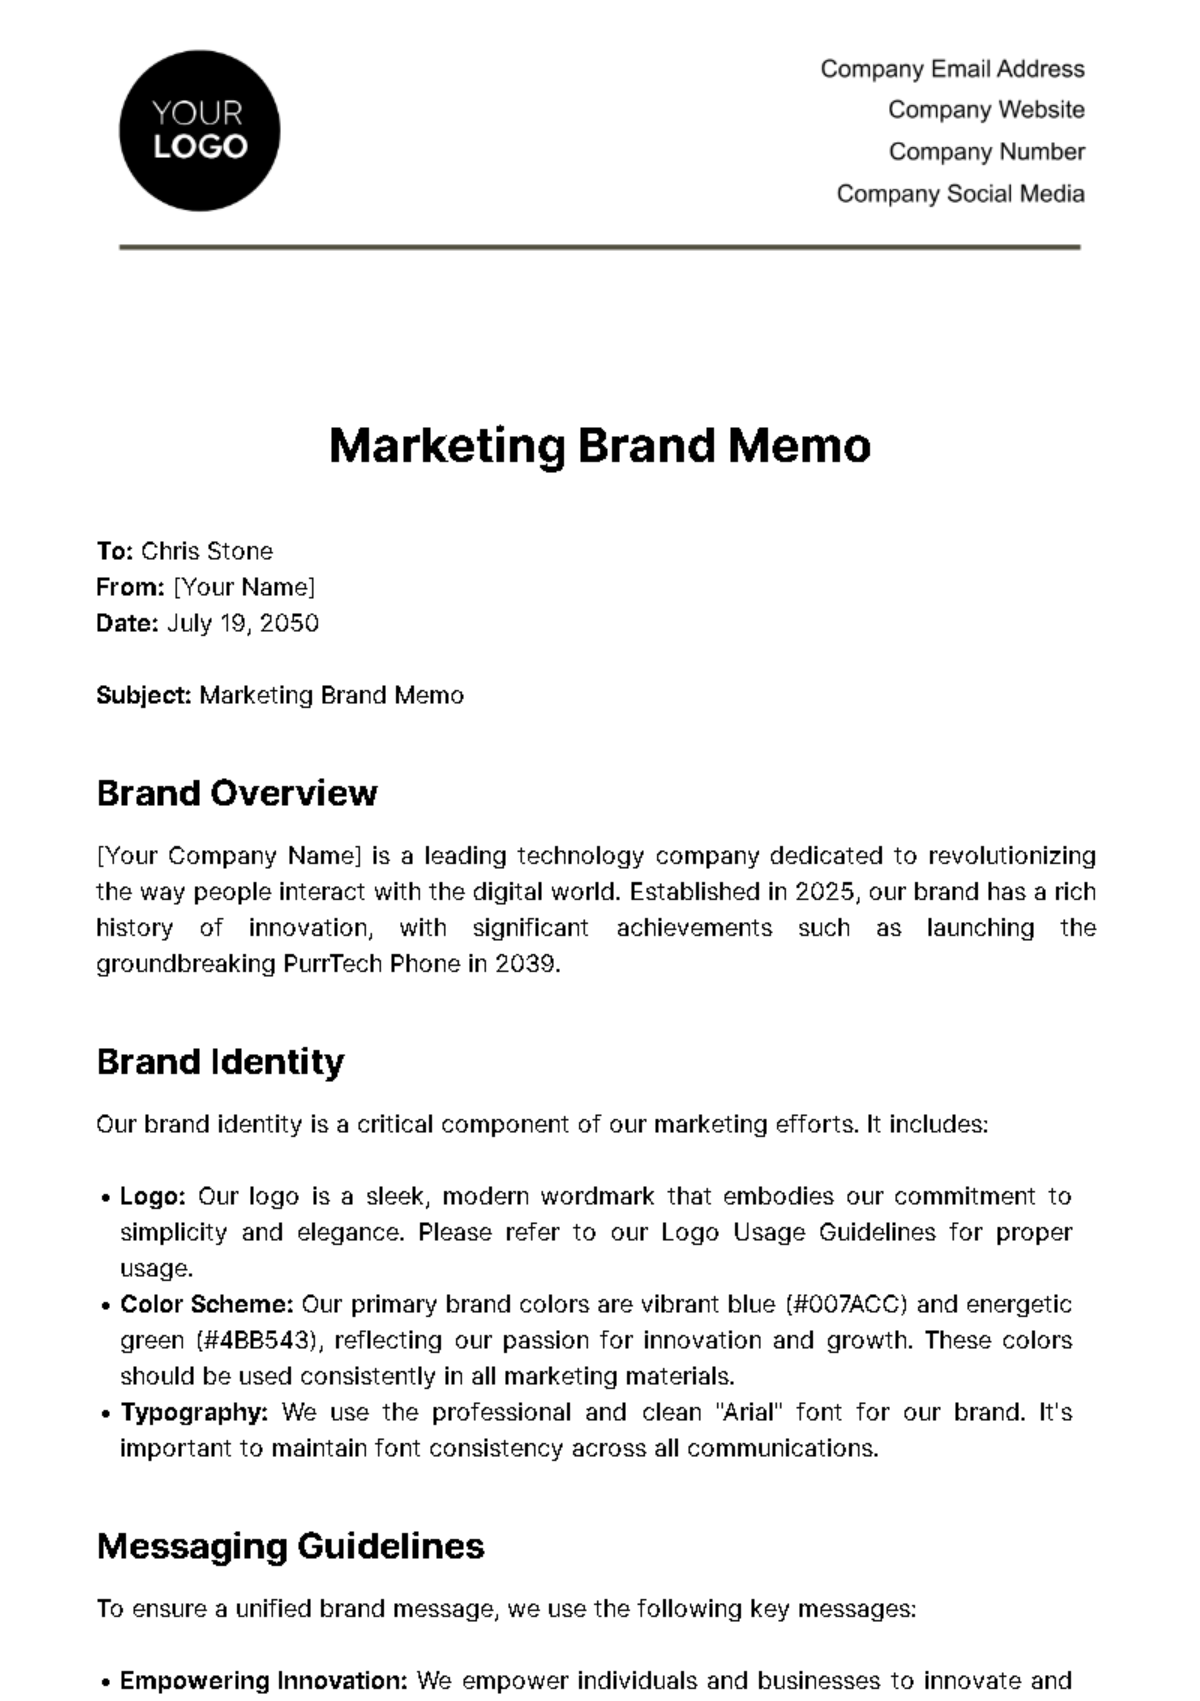 Free Marketing Brand Memo Template